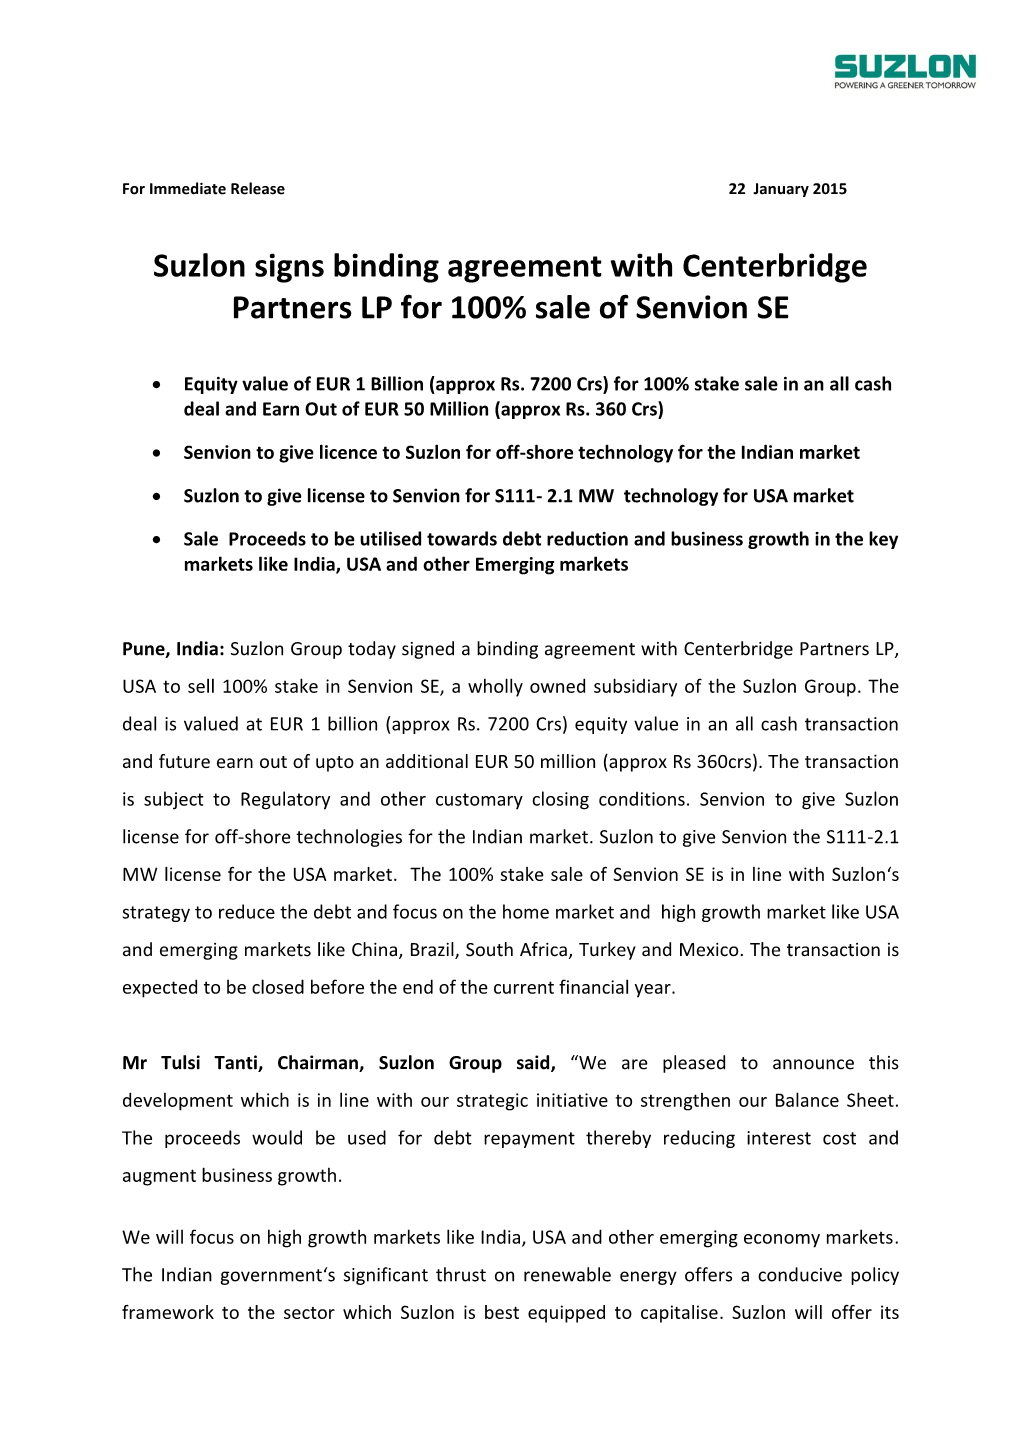 Suzlon Signs Binding Agreement with Centerbridge Partners LP for 100% Sale of Senvion SE